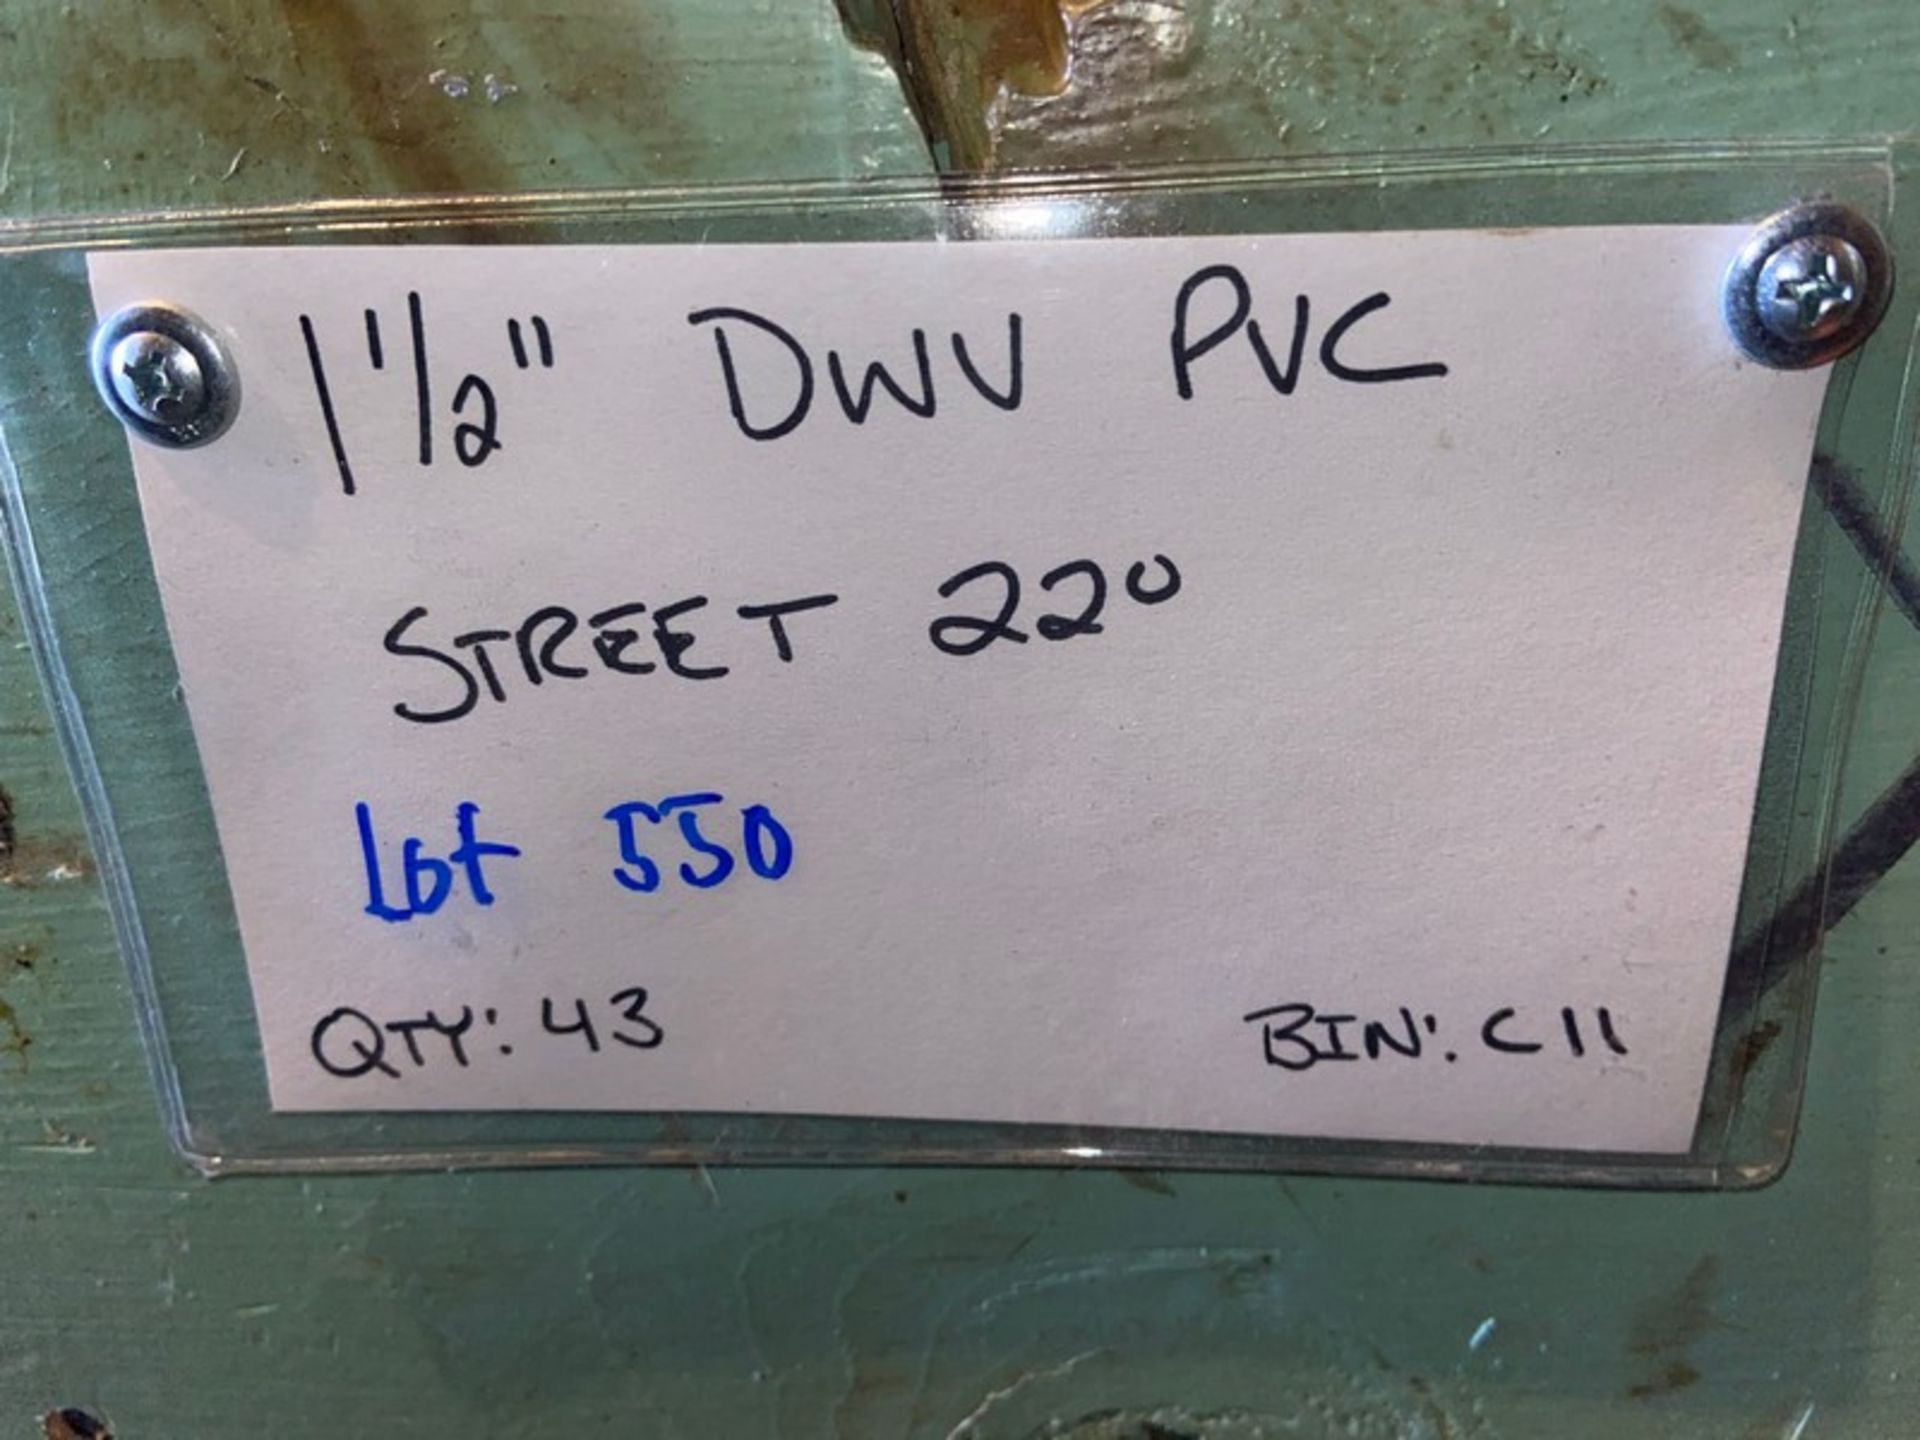 (43) 1 1/2 DWC PVC STREET 22’ (Bin:C11)(LOCATED IN MONROEVILLE, PA) - Image 4 of 4